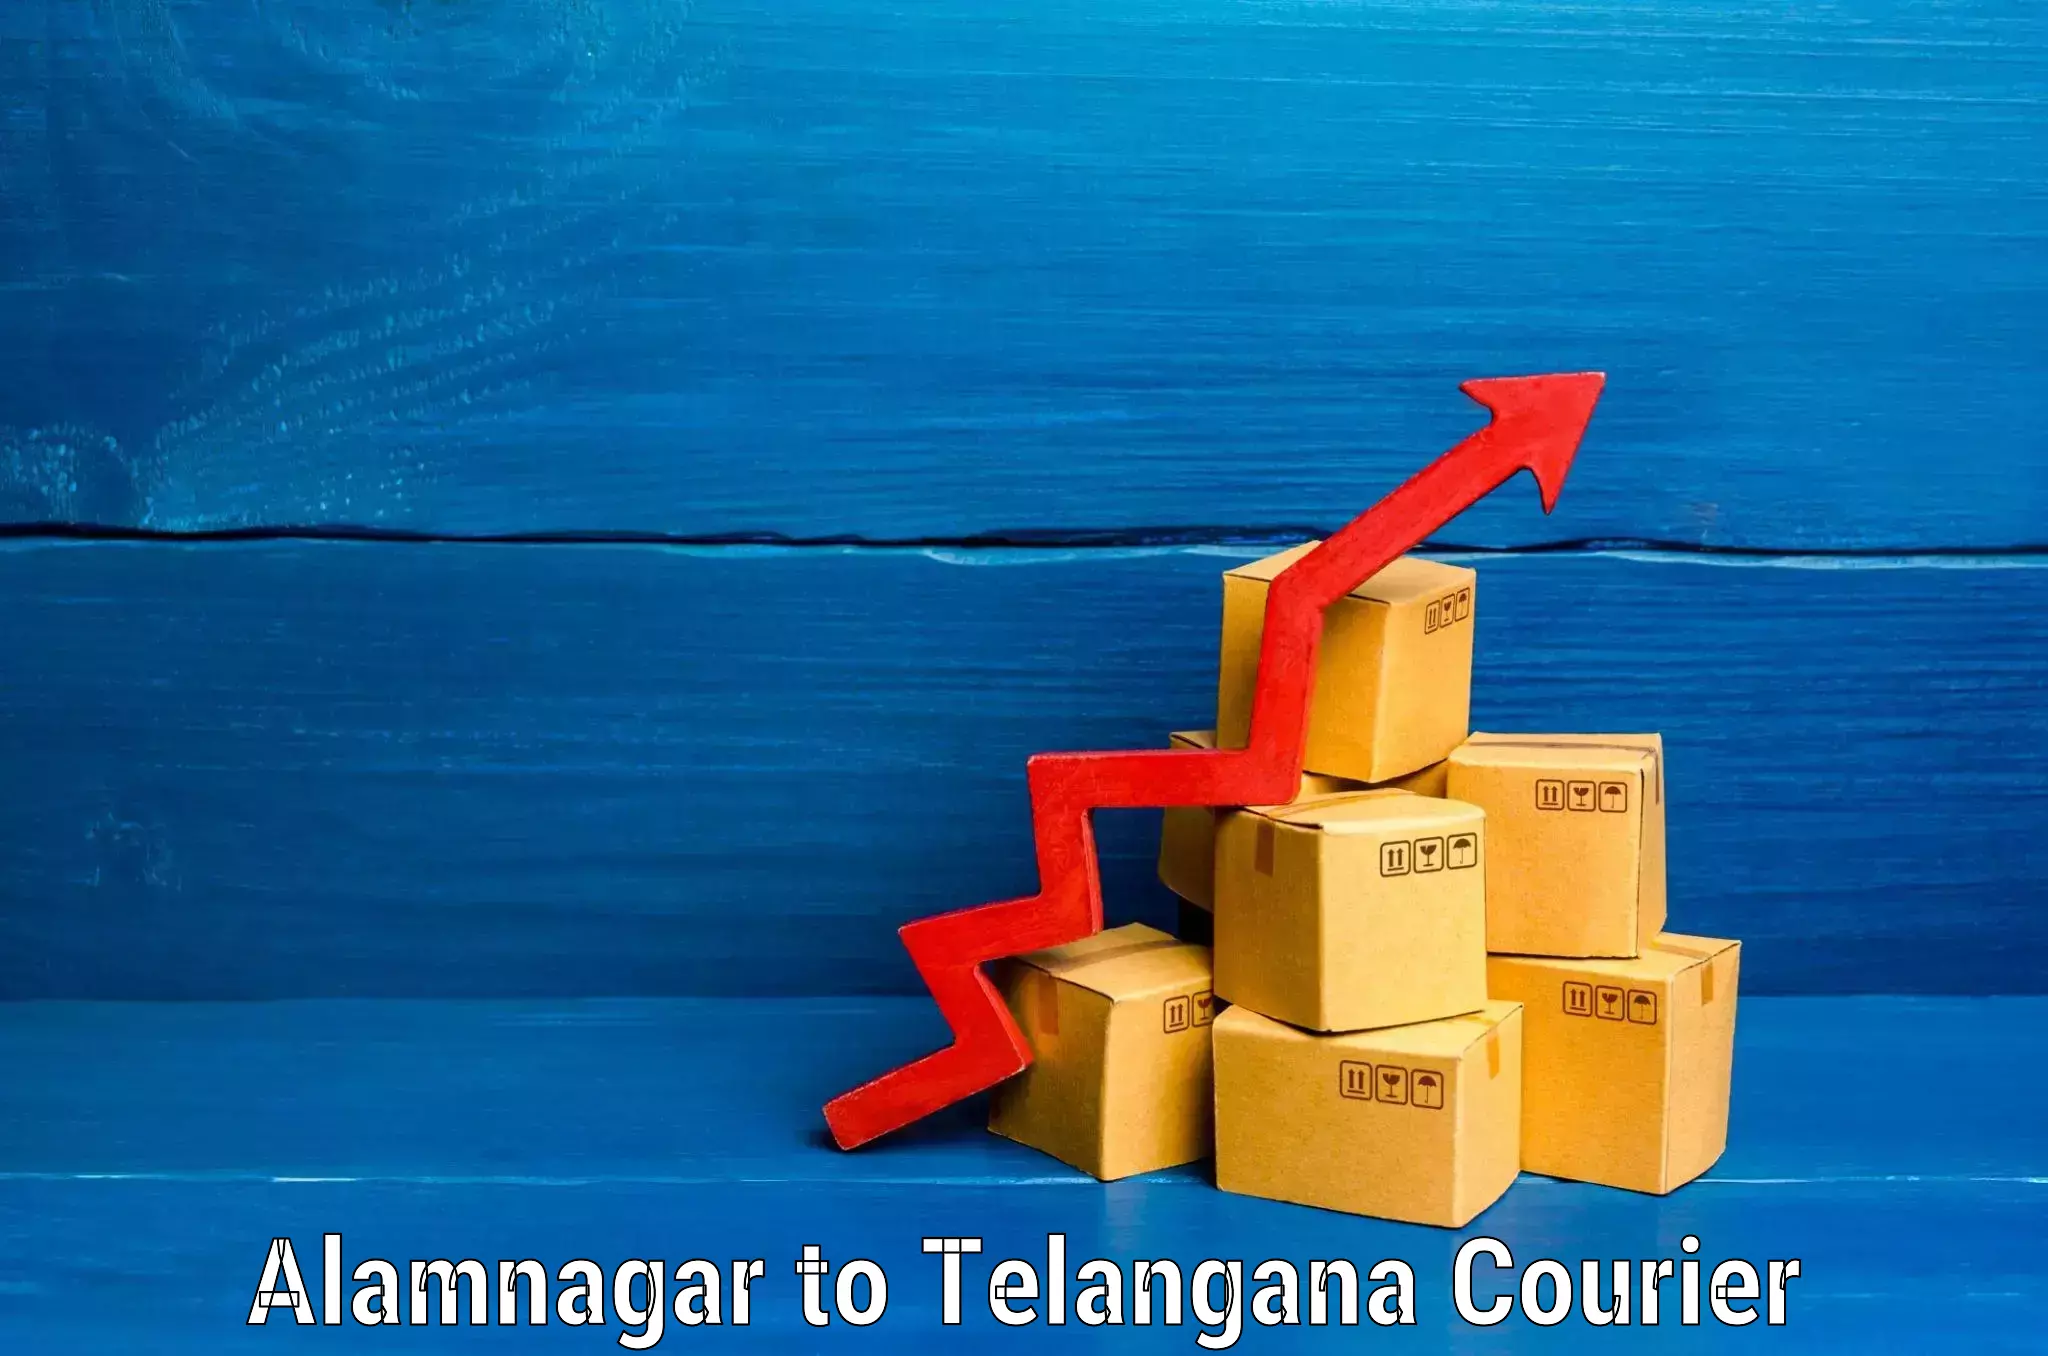 Baggage transport network Alamnagar to Telangana